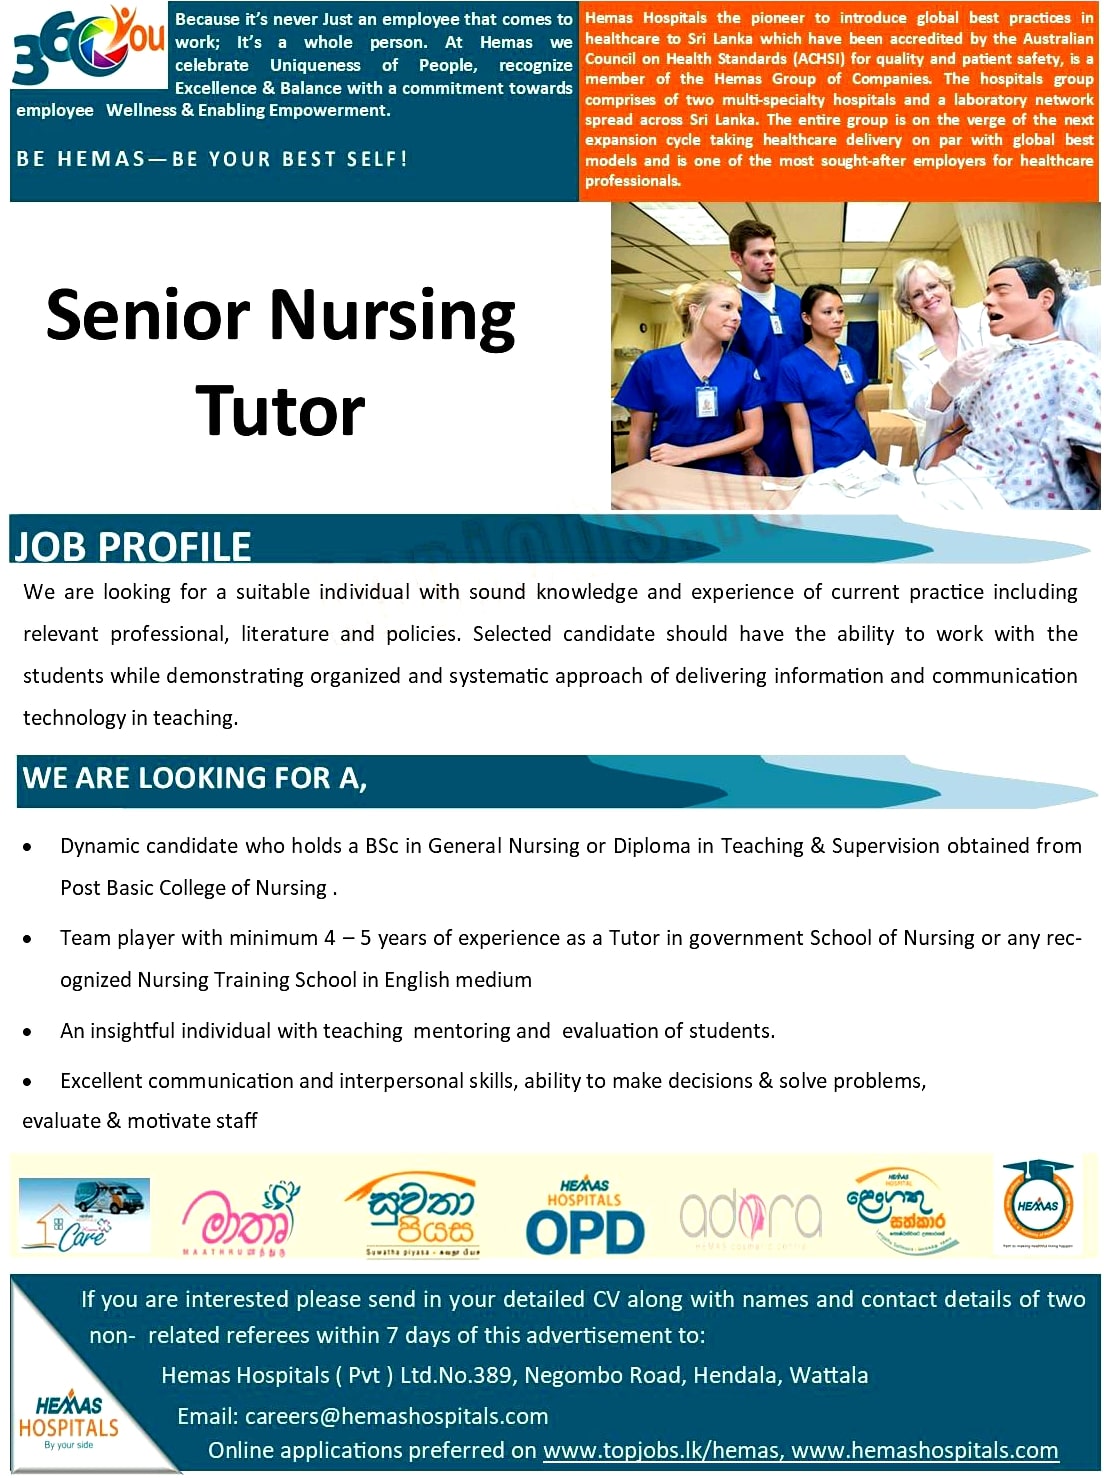 Senior Nursing Tutor Job Vacancy - Hemas Holdings PLC Jobs Vacancies